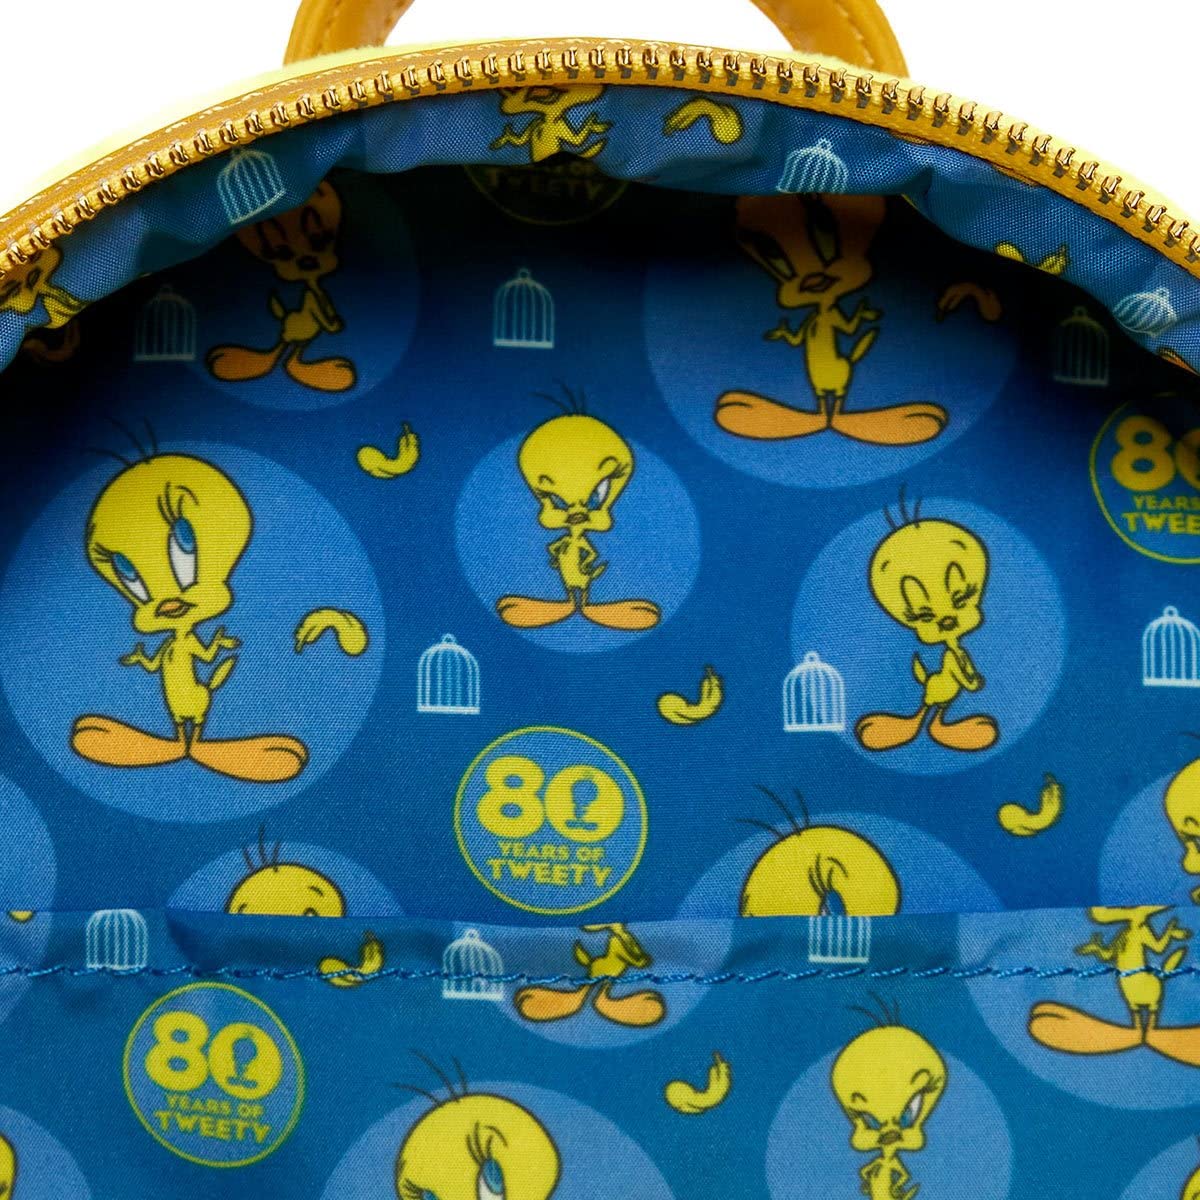 Loungefly Looney Tunes Tweety Plush Mini Backpack Yellow